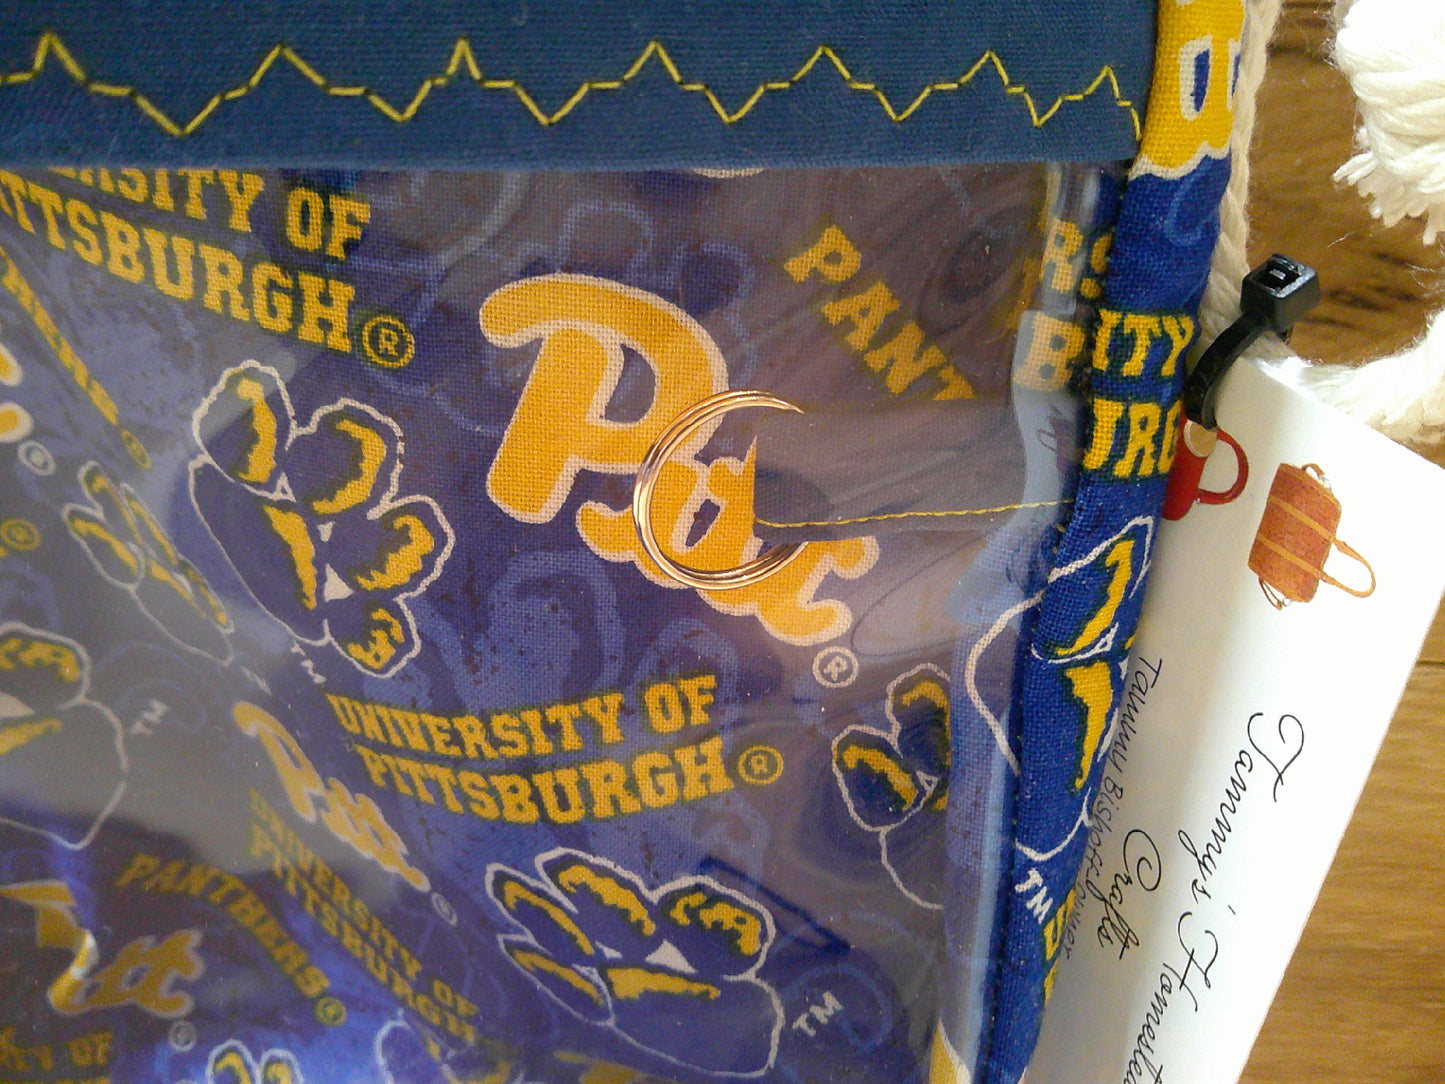 Pitt University of Pittsburgh ~ project bag